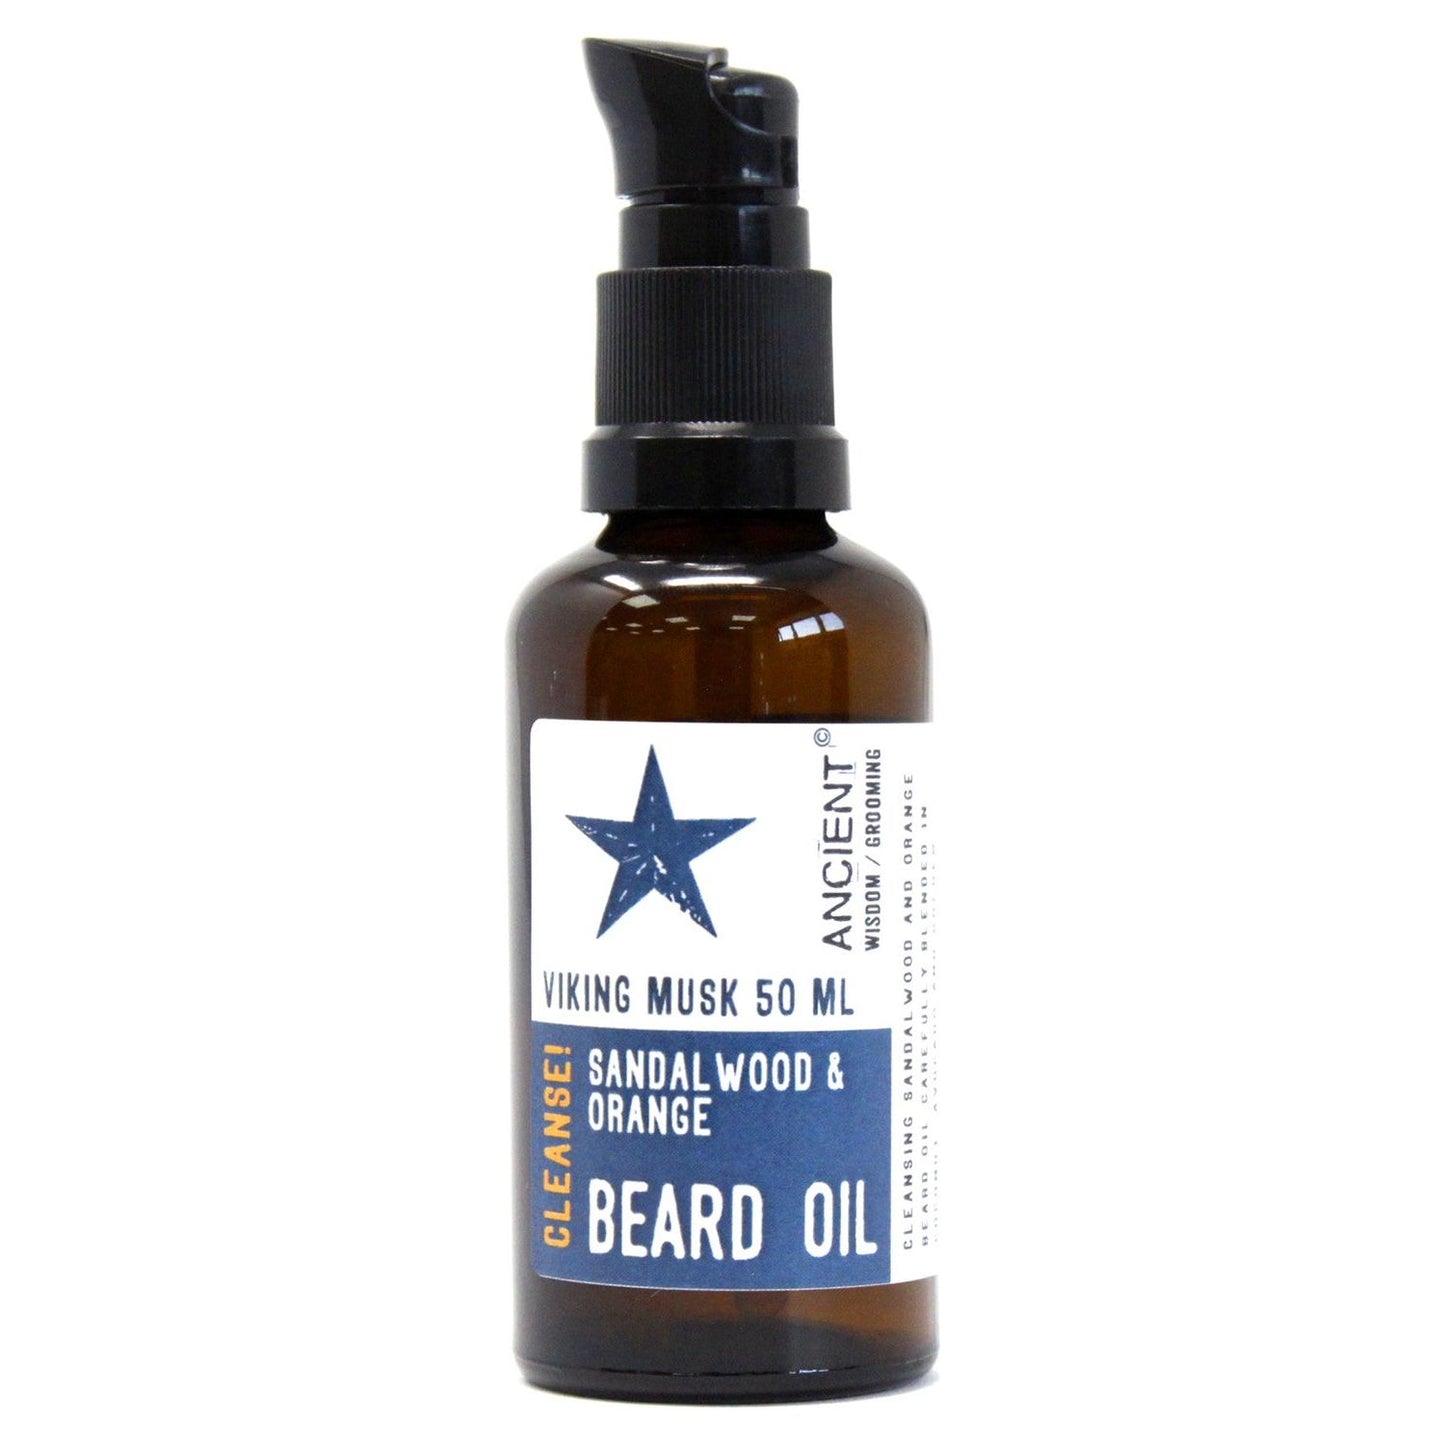 50ml Beard Oil - Viking Musk - Cleanse! - Ashton and Finch